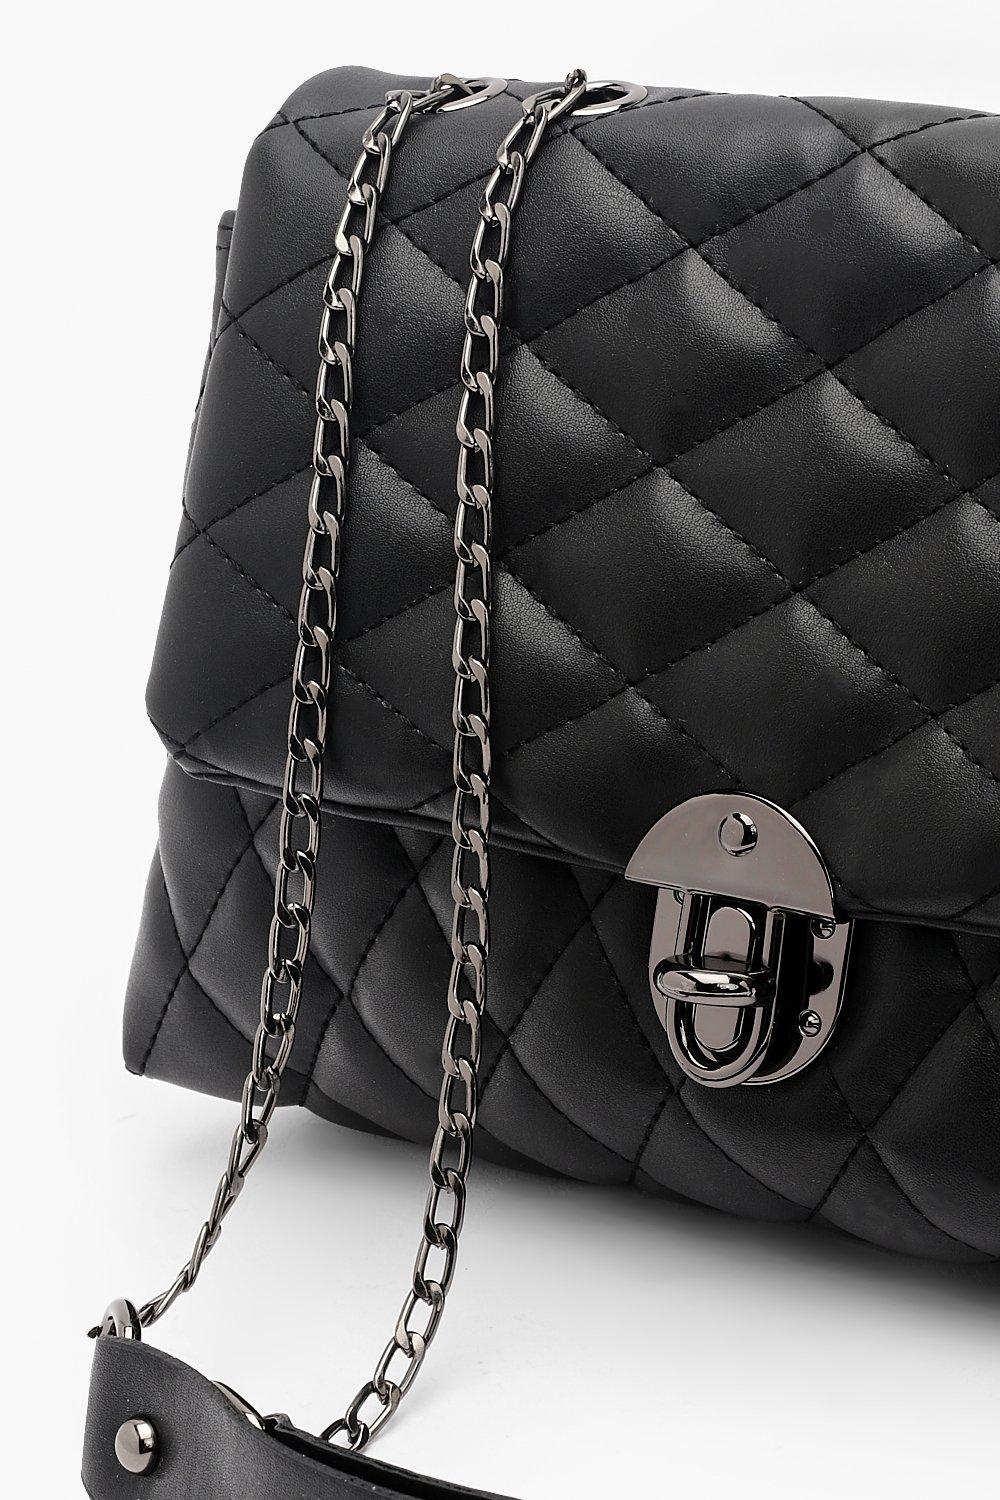 Prada Black Quilted Chain Crossbody Bag